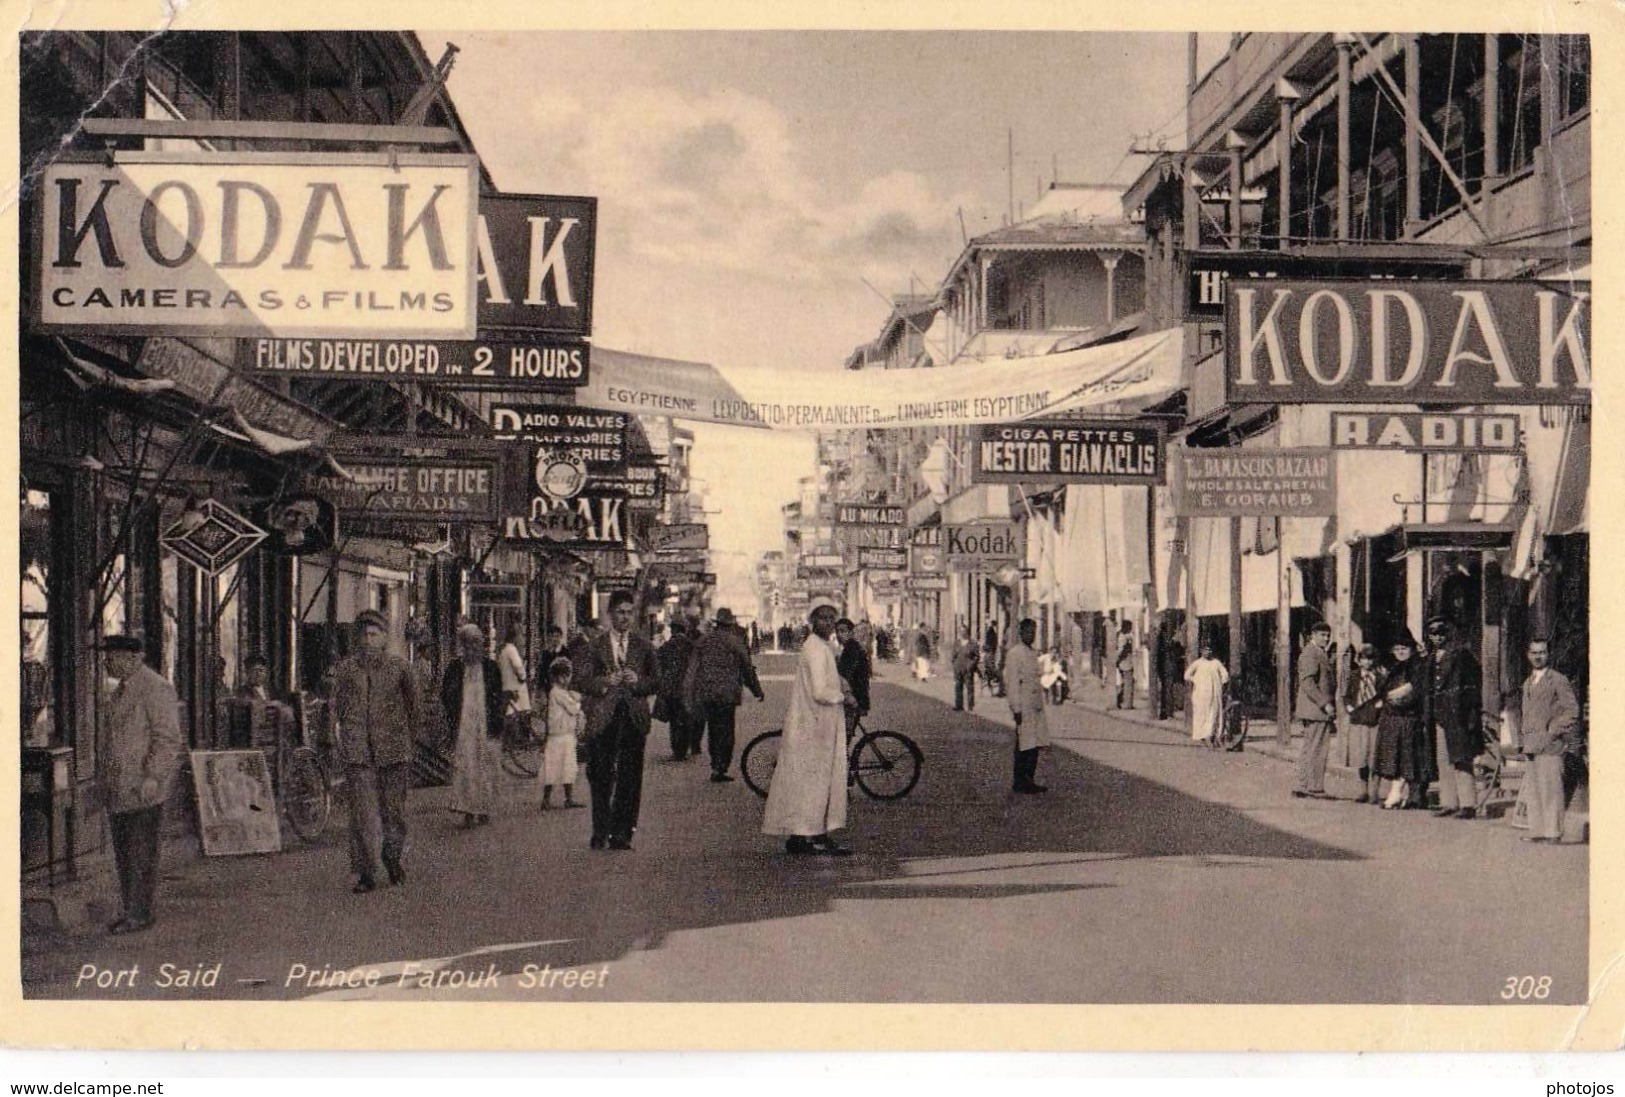 Postcard :Port Saïd (Egypte) Prince Farouk Street   Oriental Bureau Pub Cameras & Films Kodak - Asyut